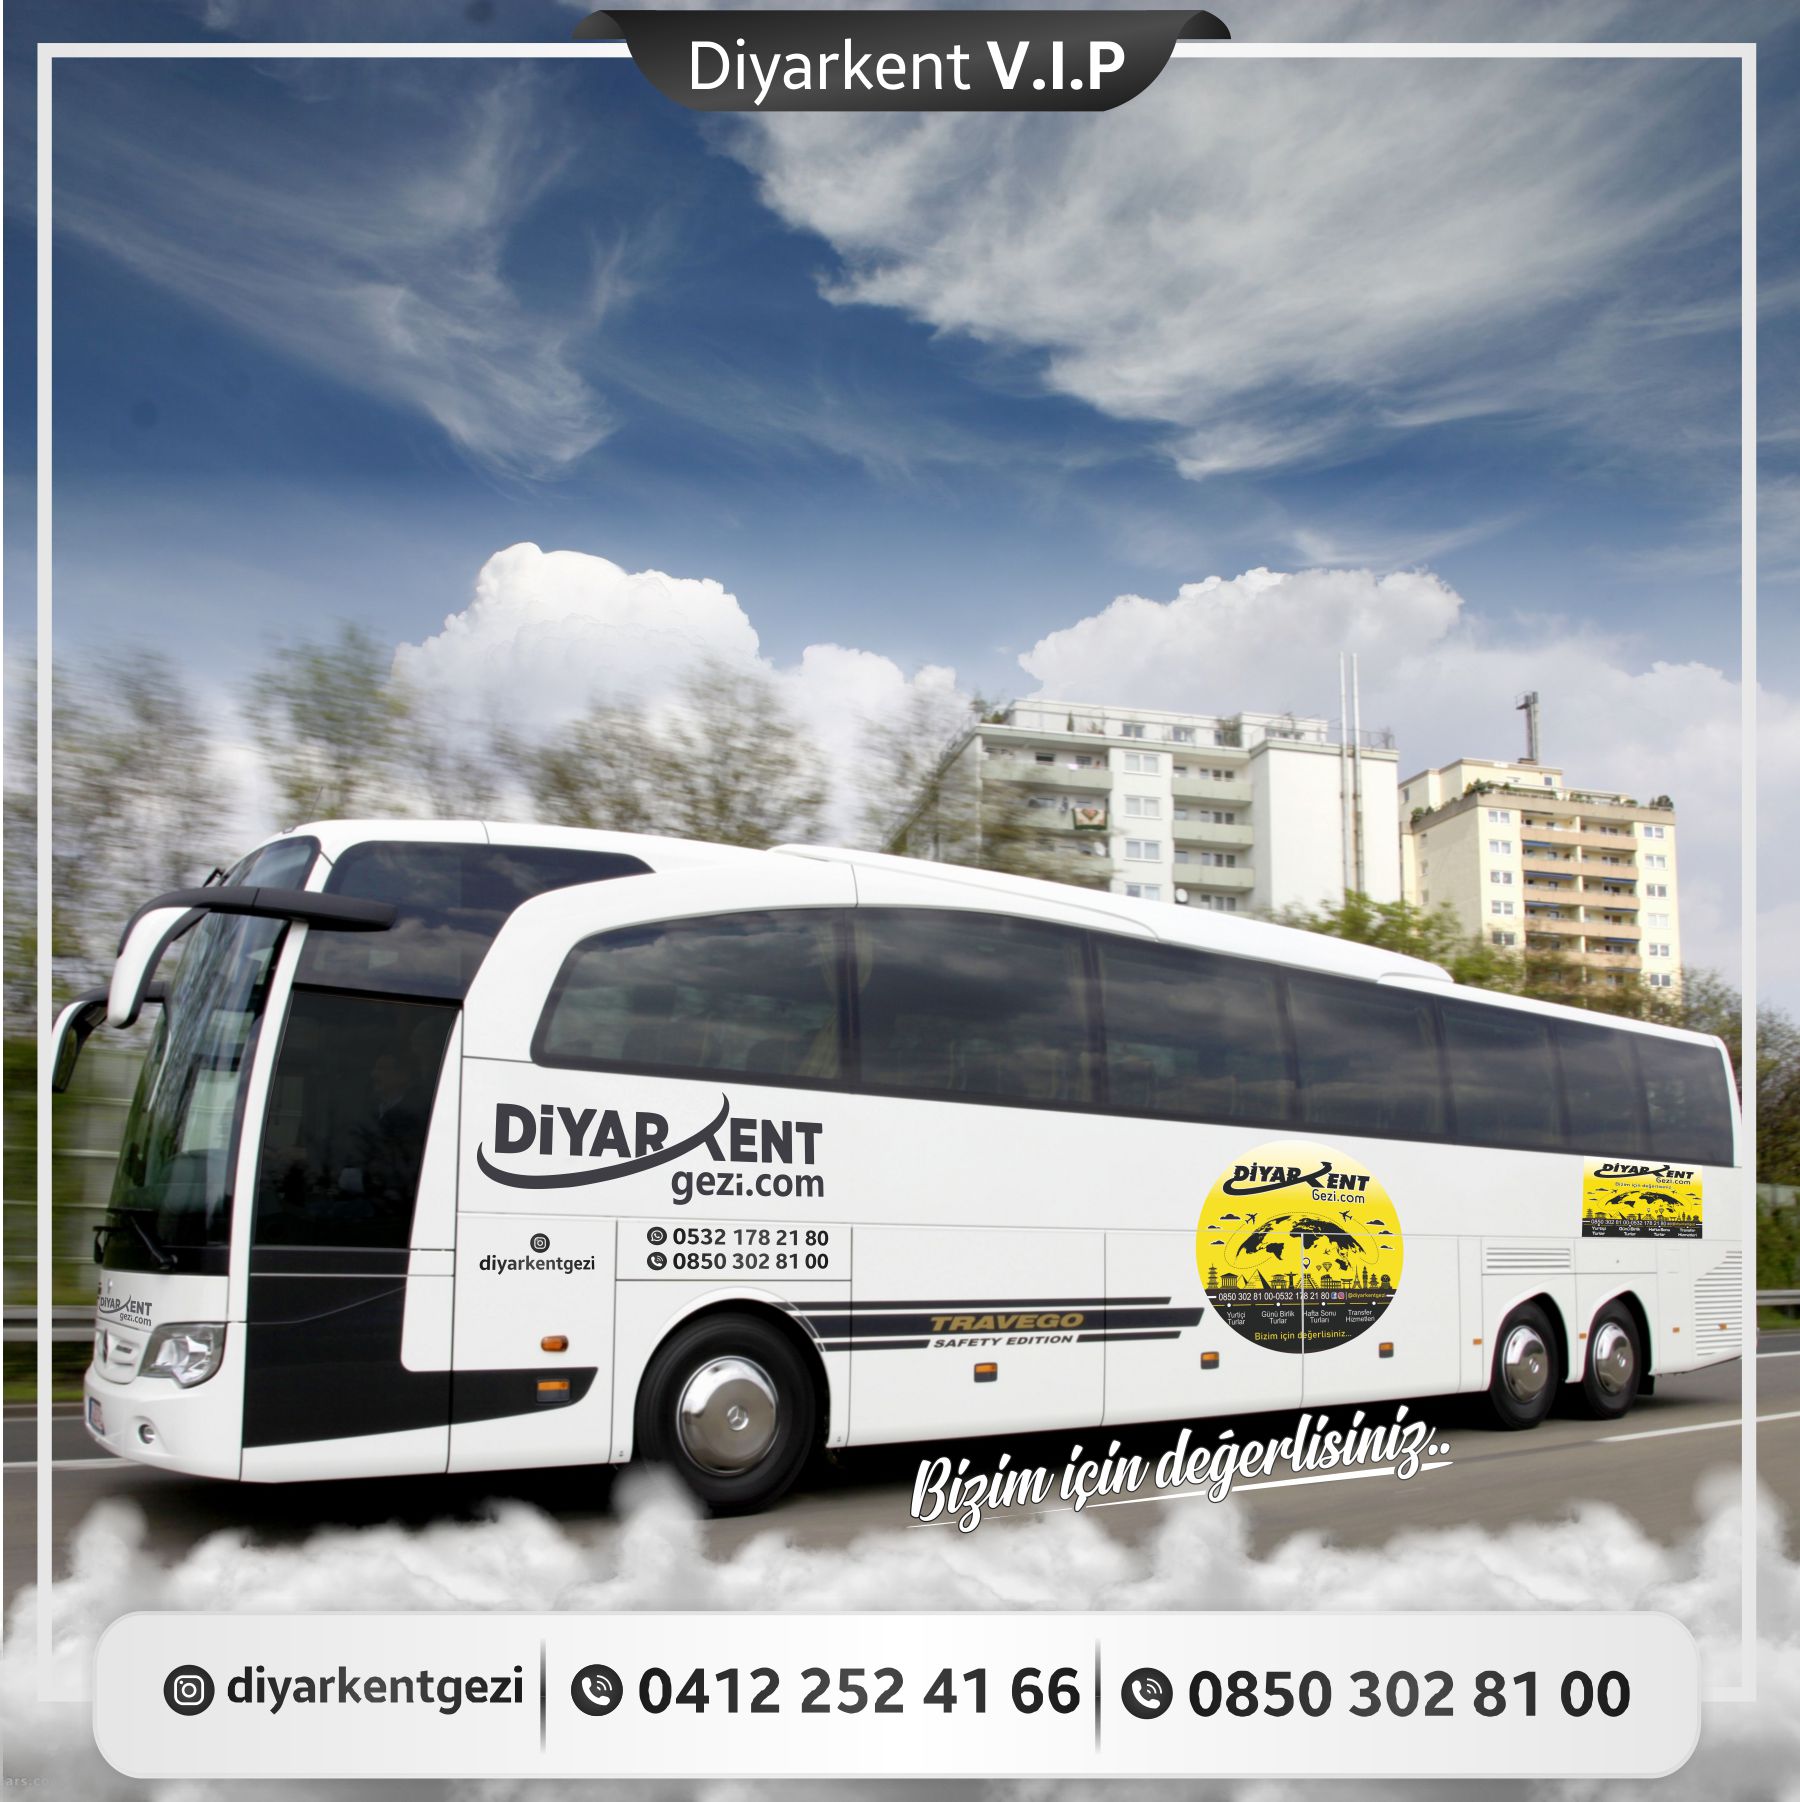 Diyarkent Vip Travel	1